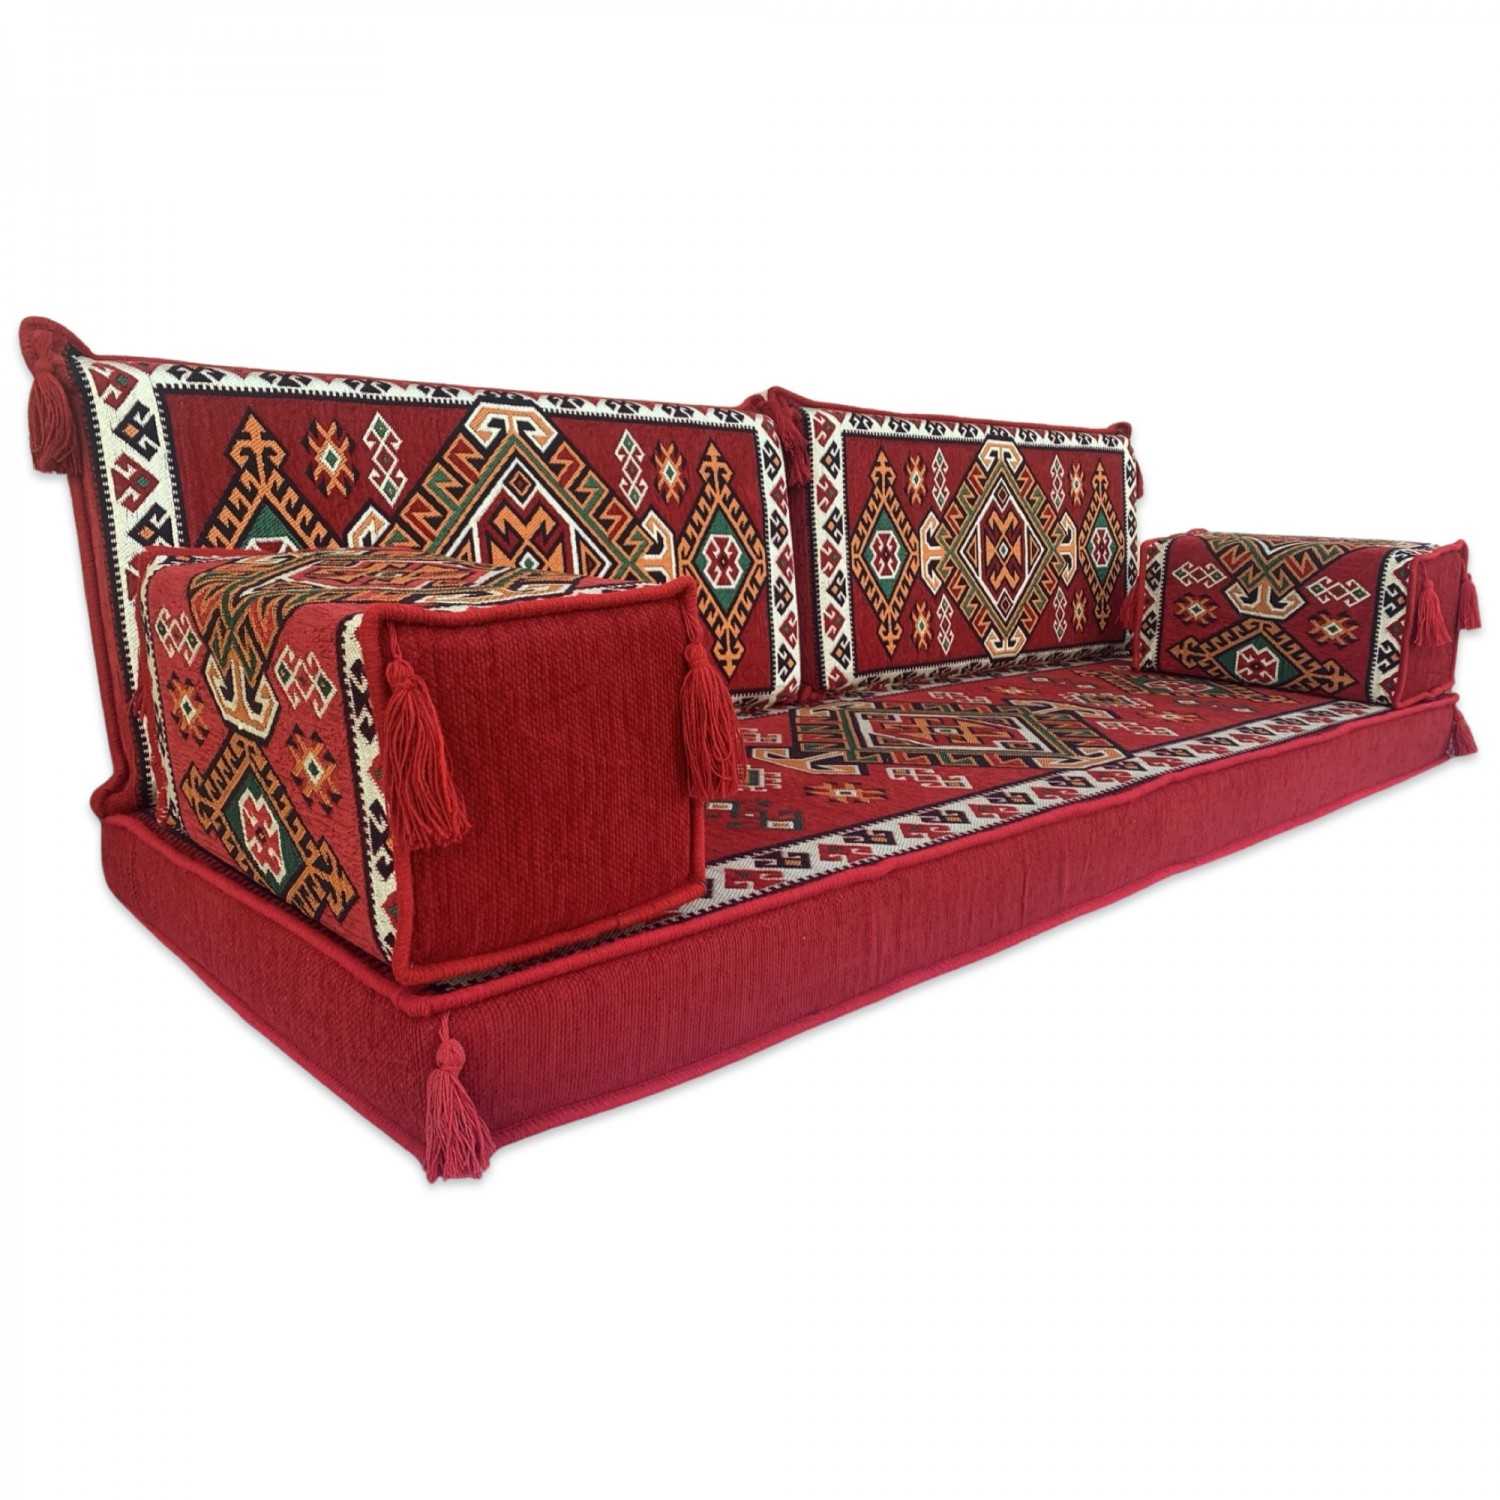 LUXOR Red Three Seater Majlis Floor Sofa Set